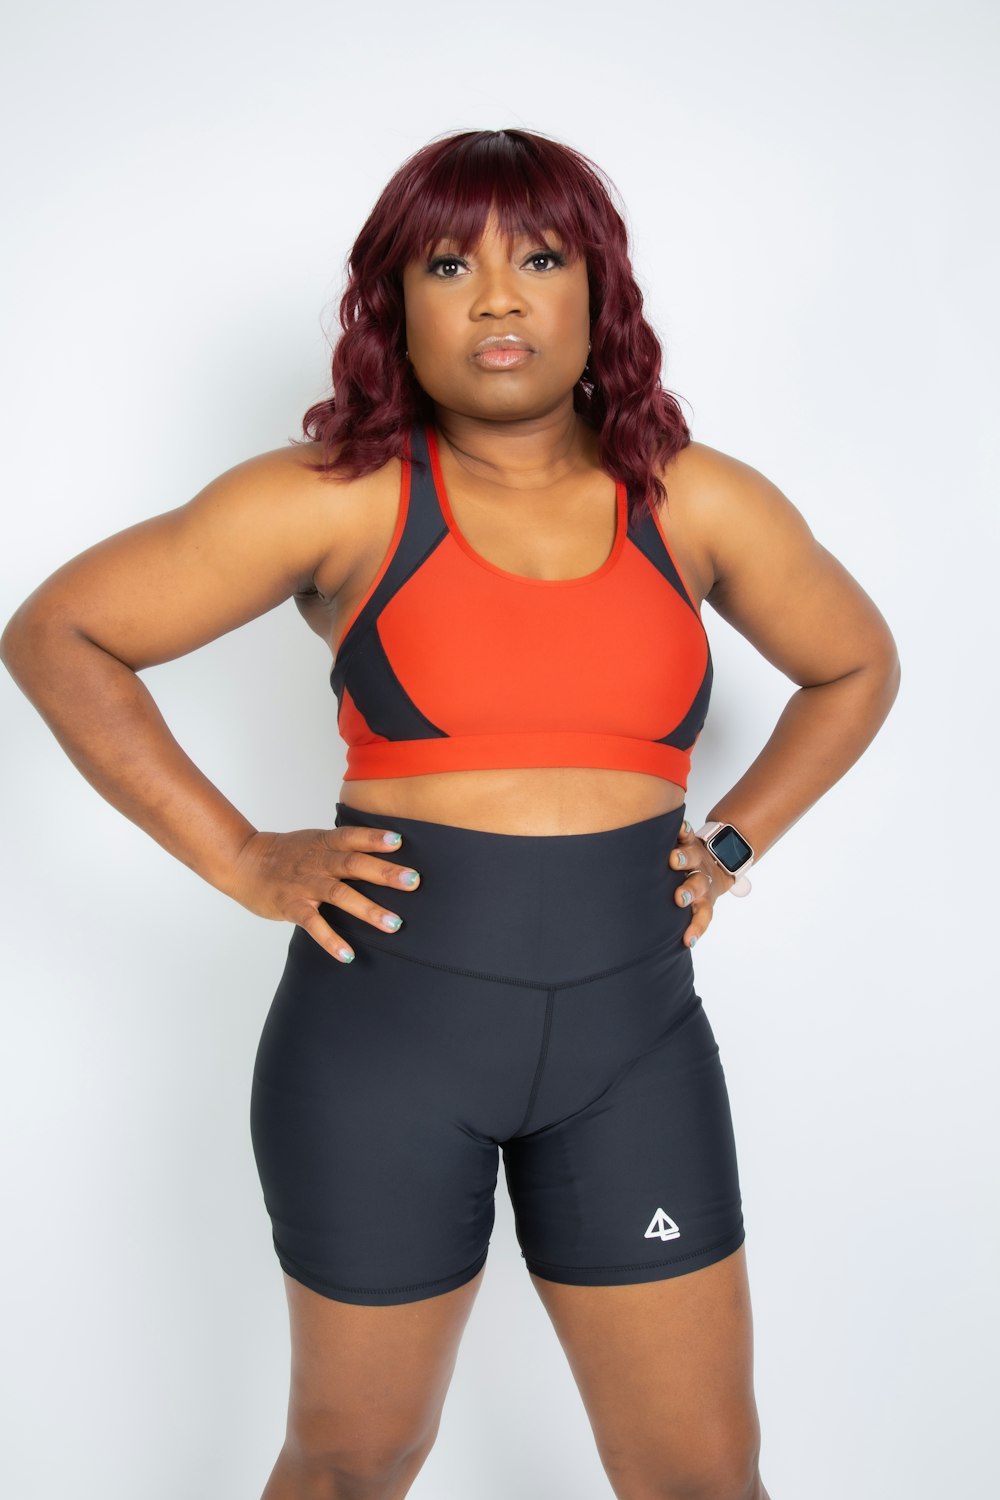 woman in orange sports bra and black leggings